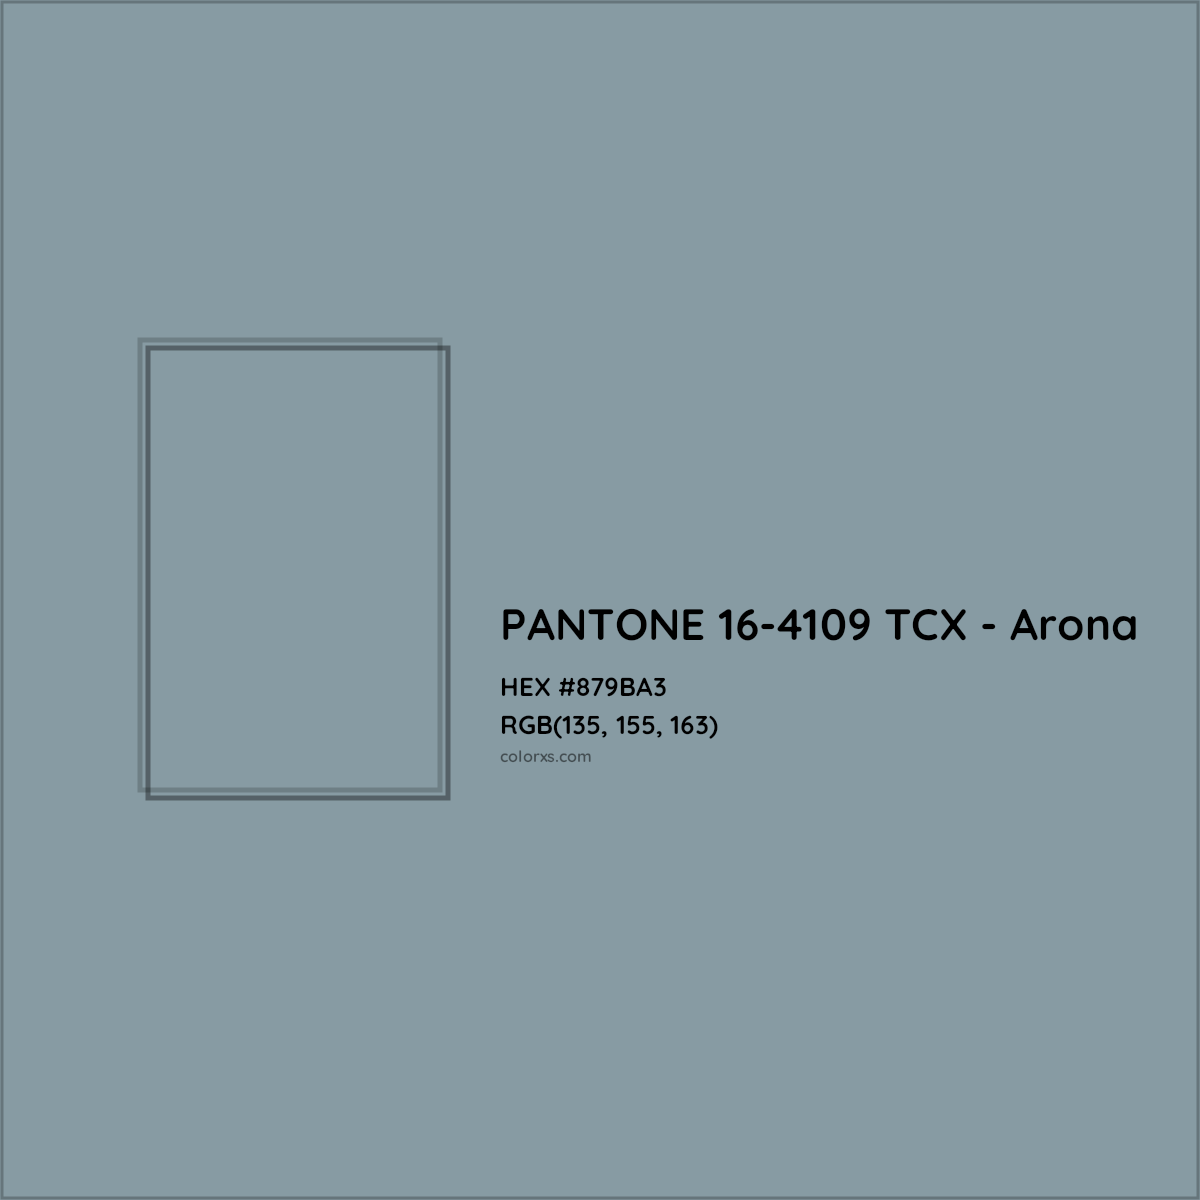 HEX #879BA3 PANTONE 16-4109 TCX - Arona CMS Pantone TCX - Color Code